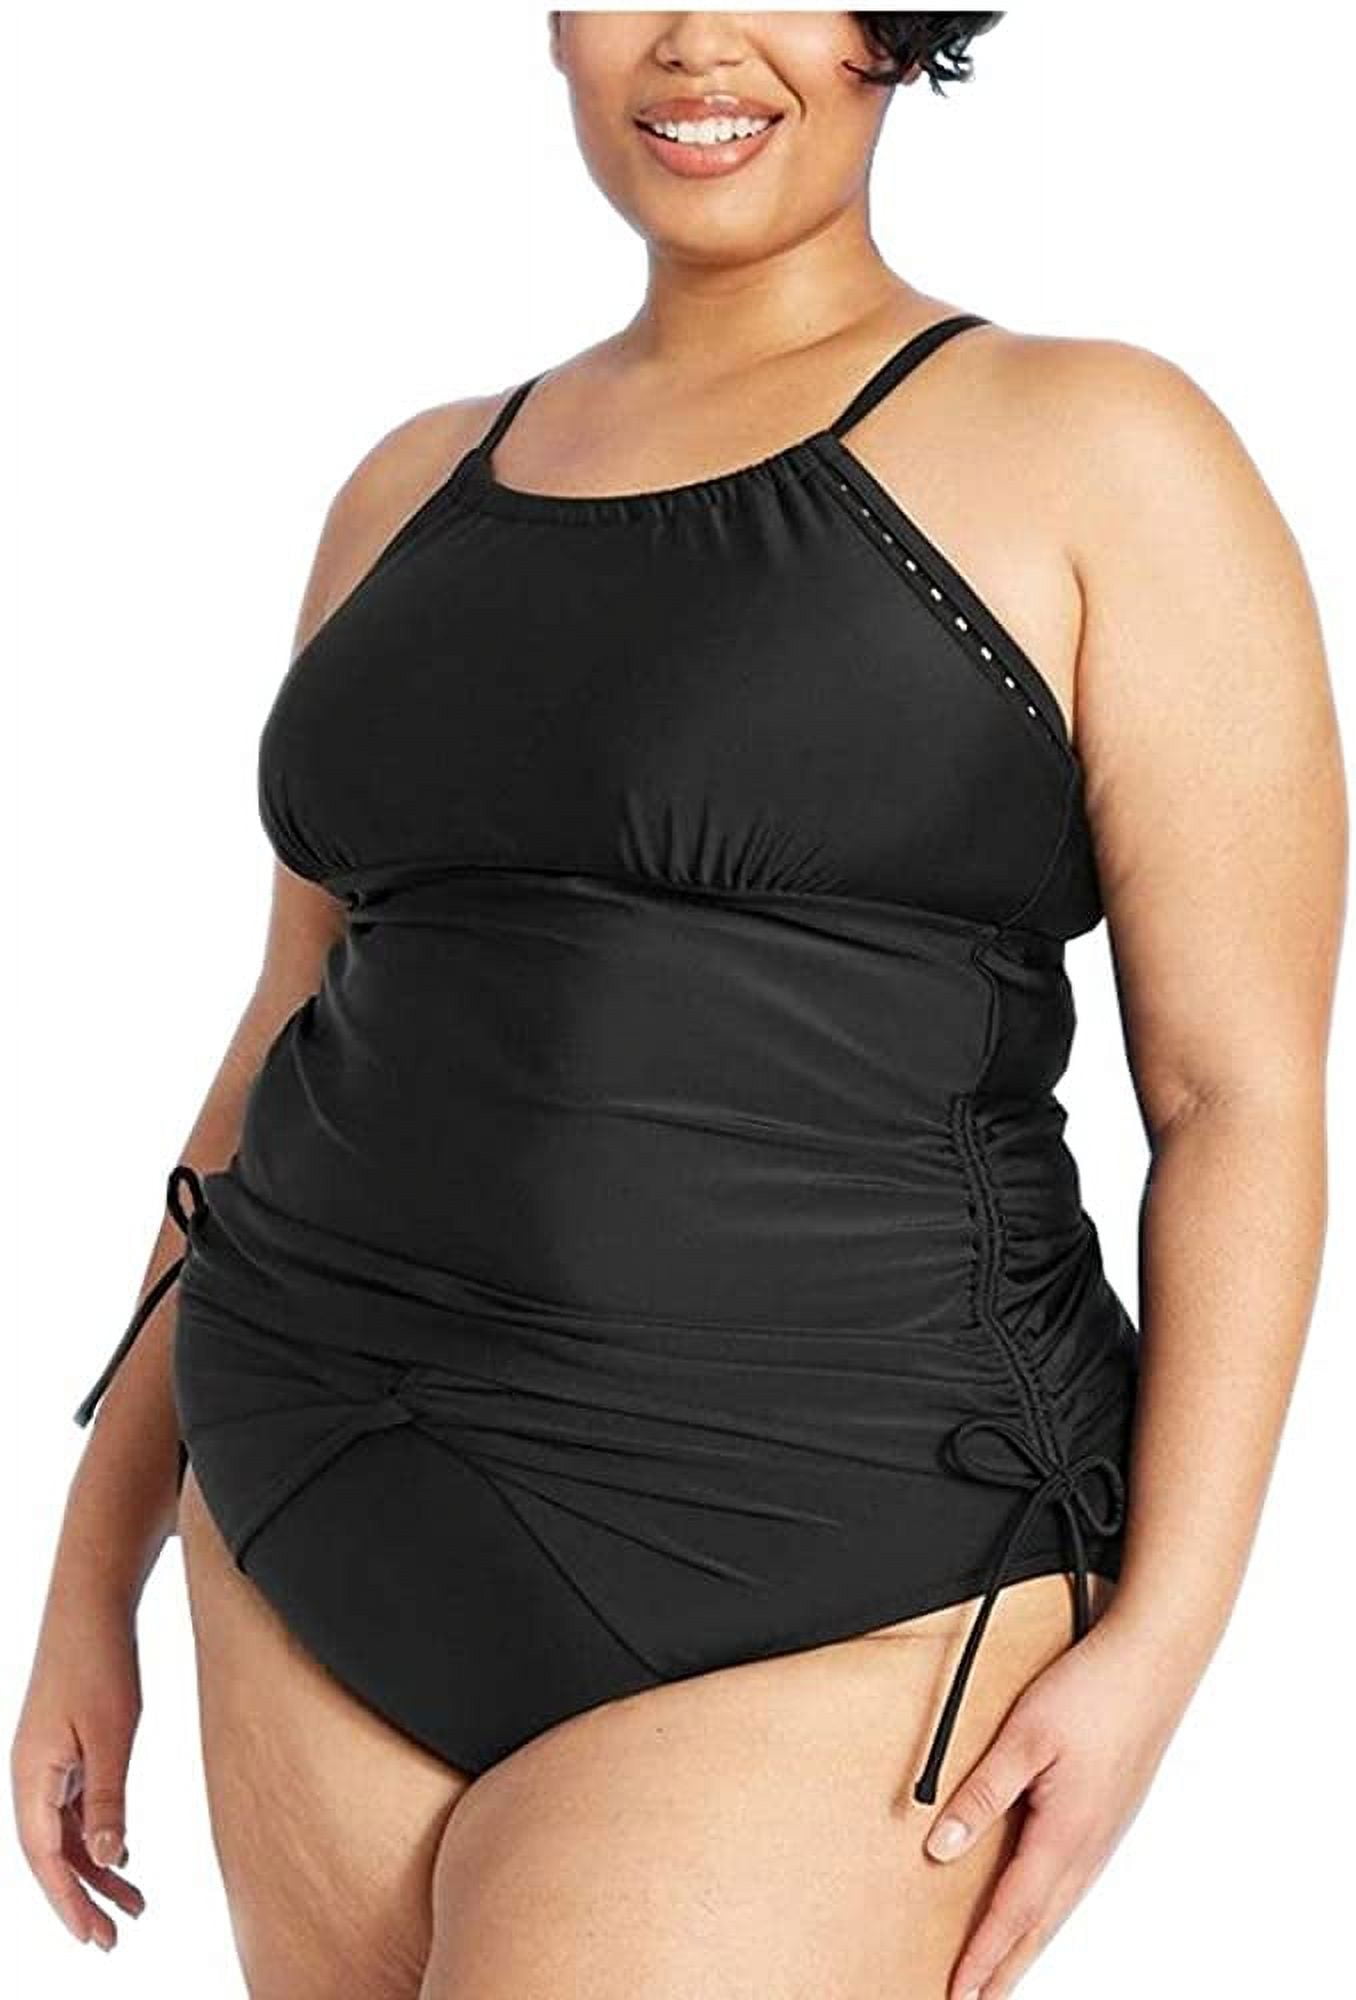 Kona Sol swimsuit one piece plus size adjustable built-in bra